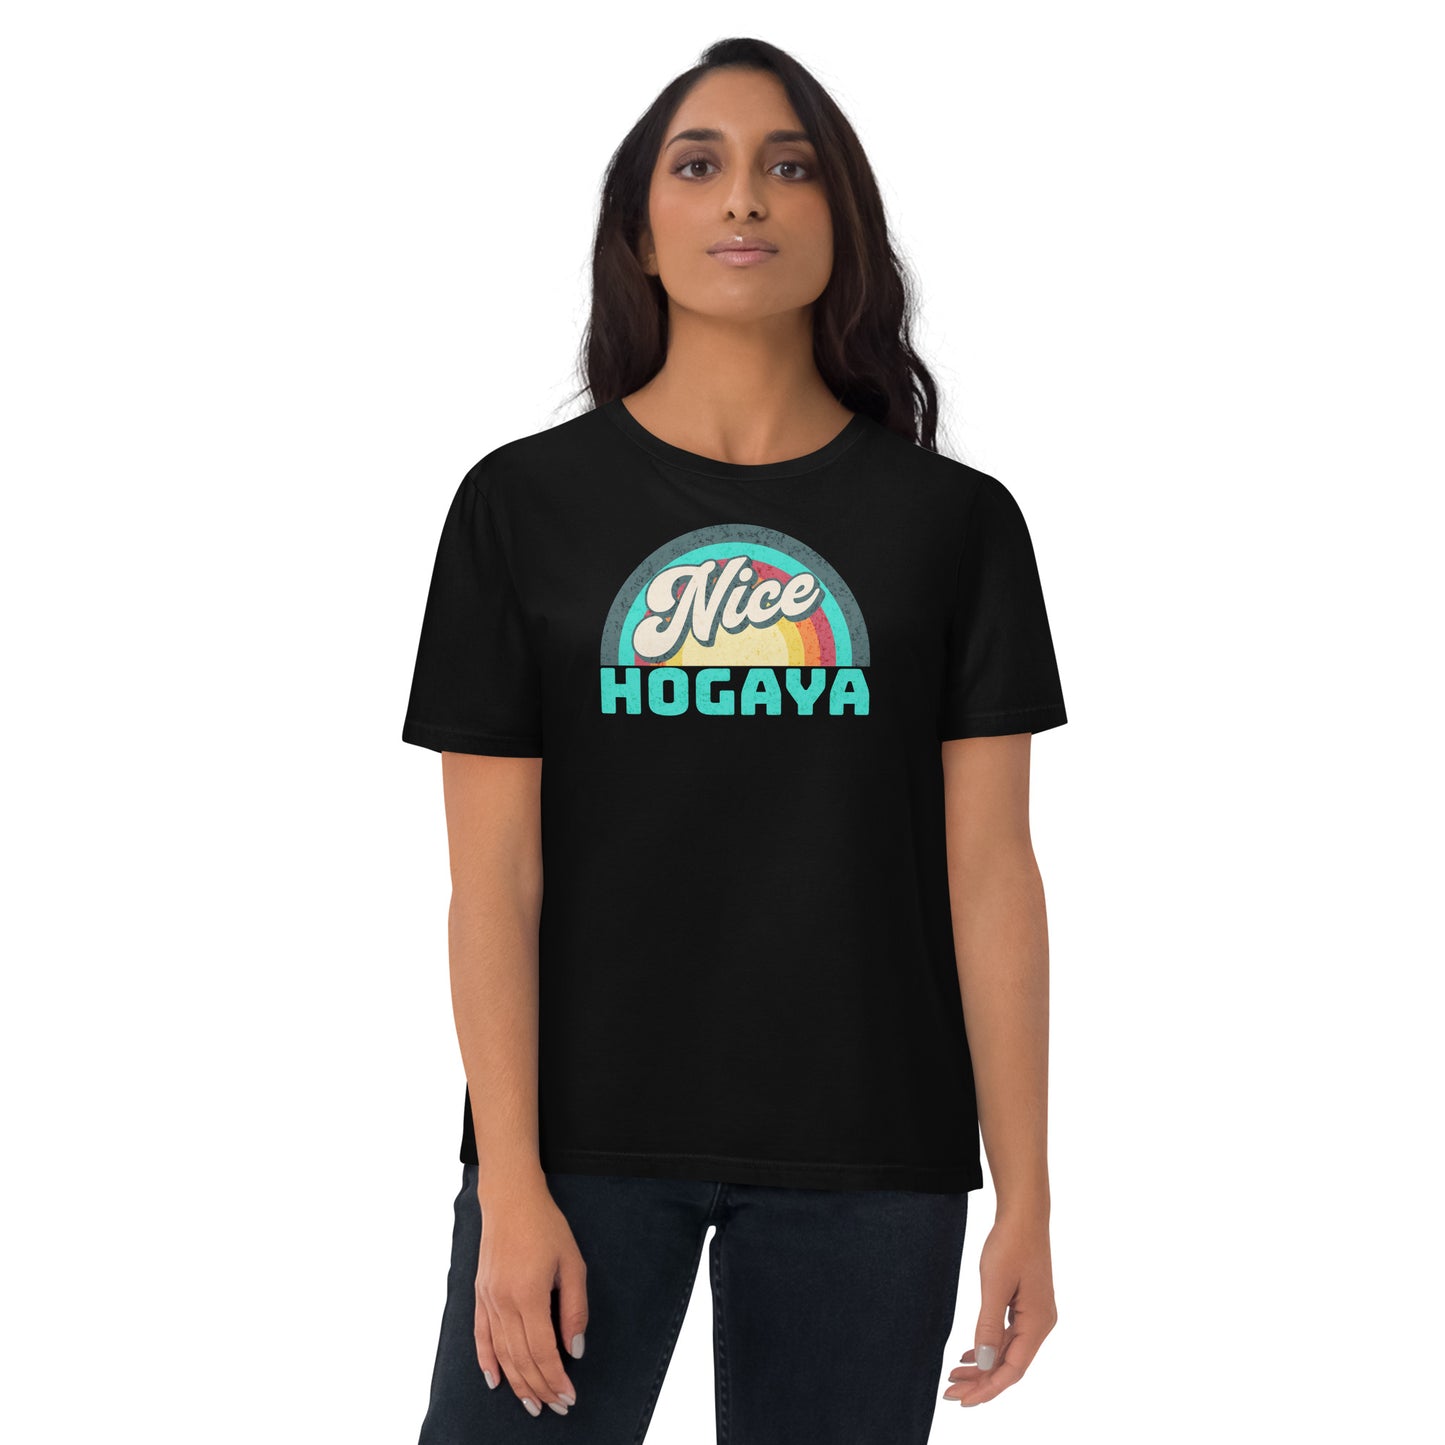 Nice Hogaya Unisex organic cotton t-shirt